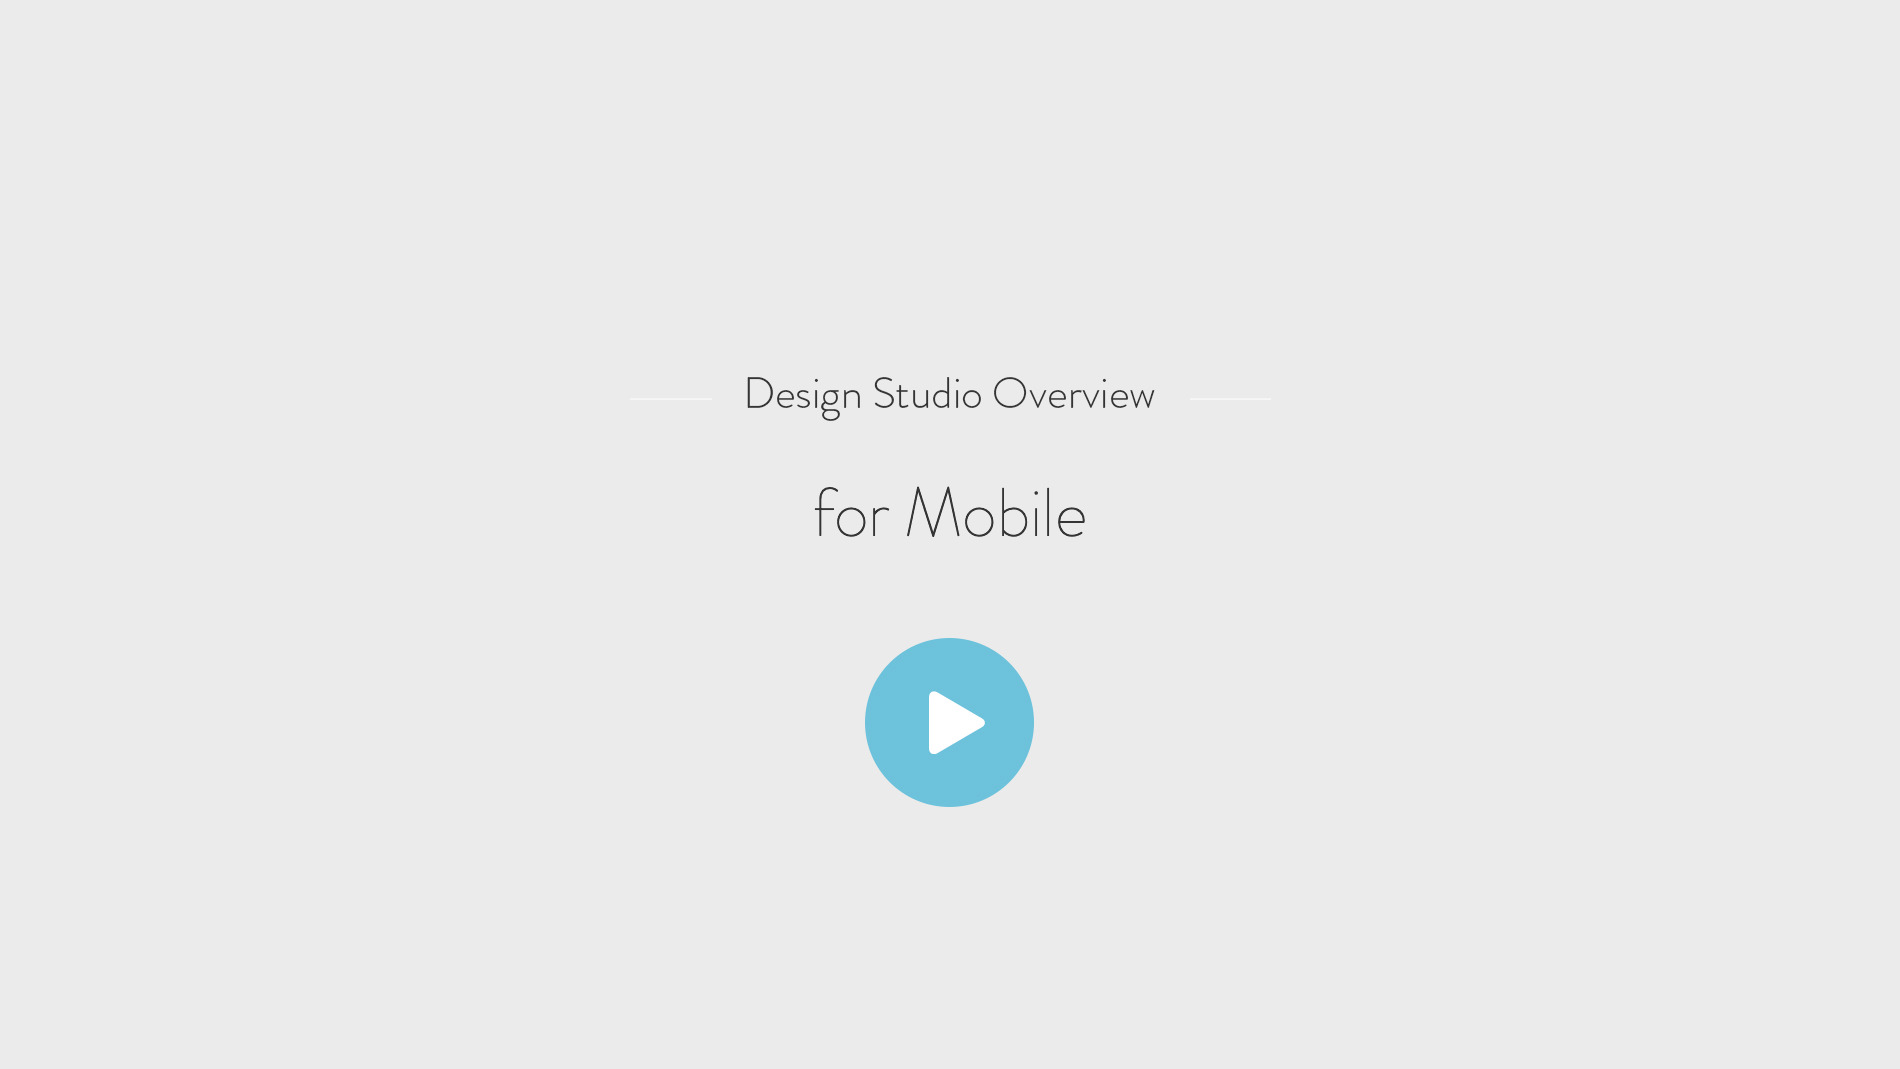 Design Studio Overview - For mobile